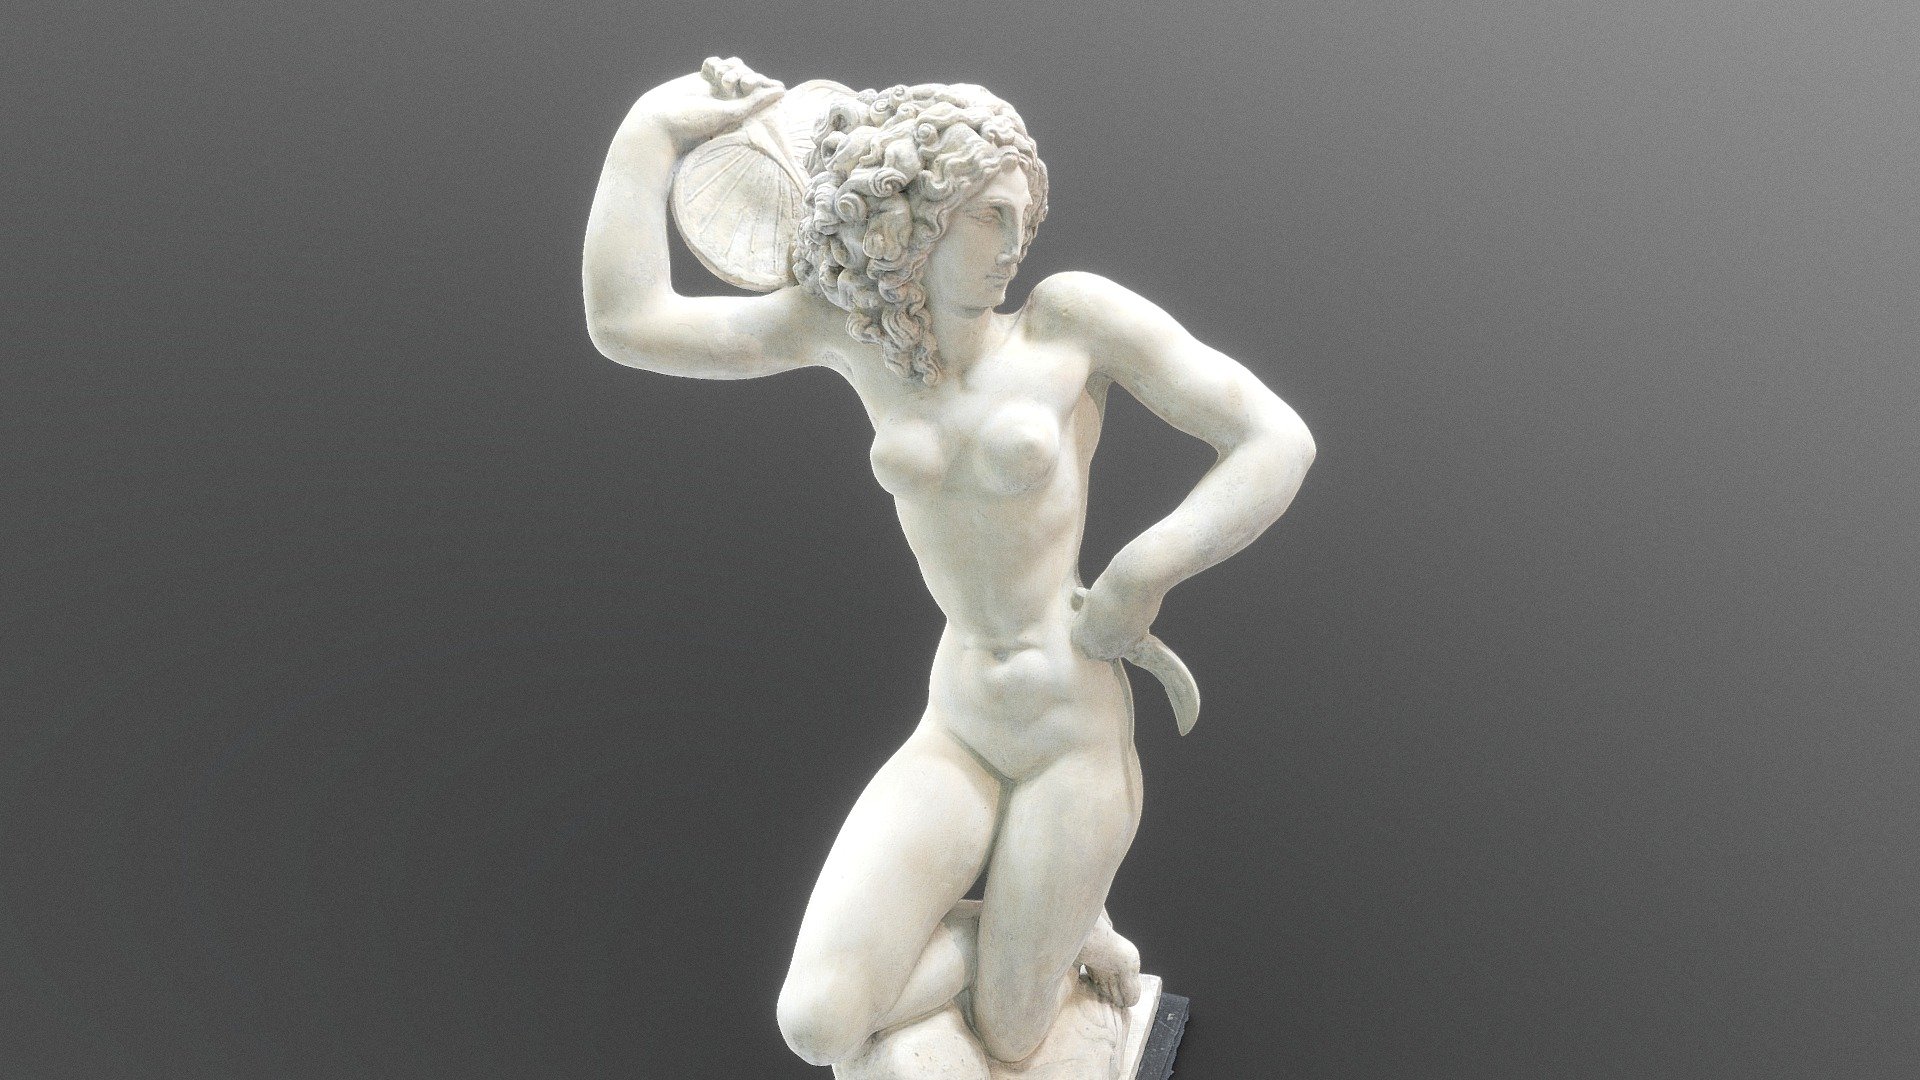 Dalilah - Female torso body in white marble

artist: Jaroslav Horejc, 1923 sculpture statue figure art artwork

Guerilla scan with the permission of the Galerie plastik Hořice (CZ)

Photogrammetry scan (120x24MP) - Dalilah - 3D model by matousekfoto 3d model